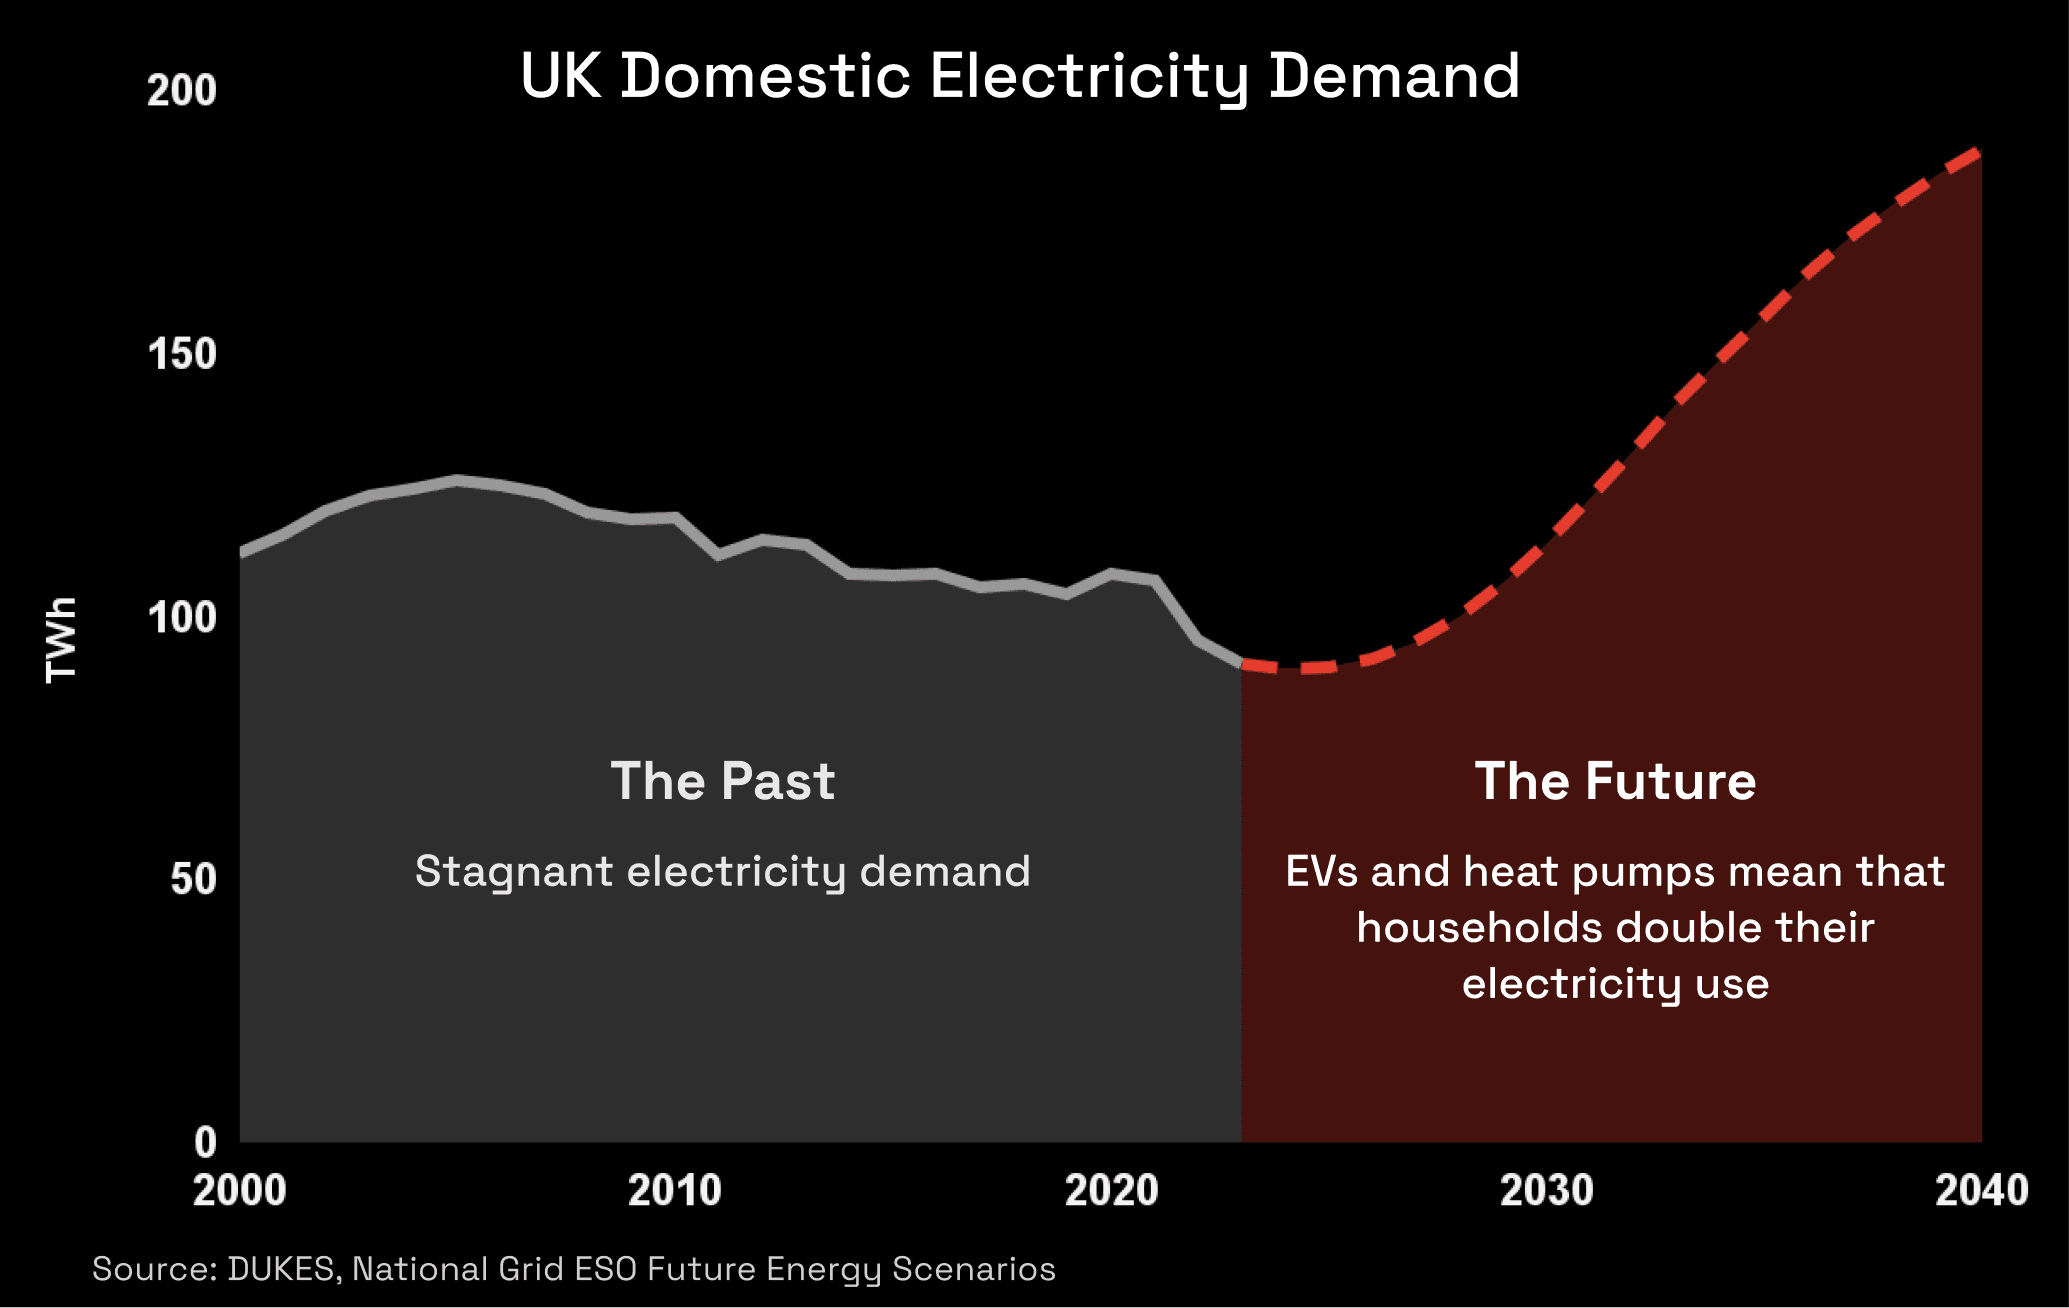 UK domestic electricity demand